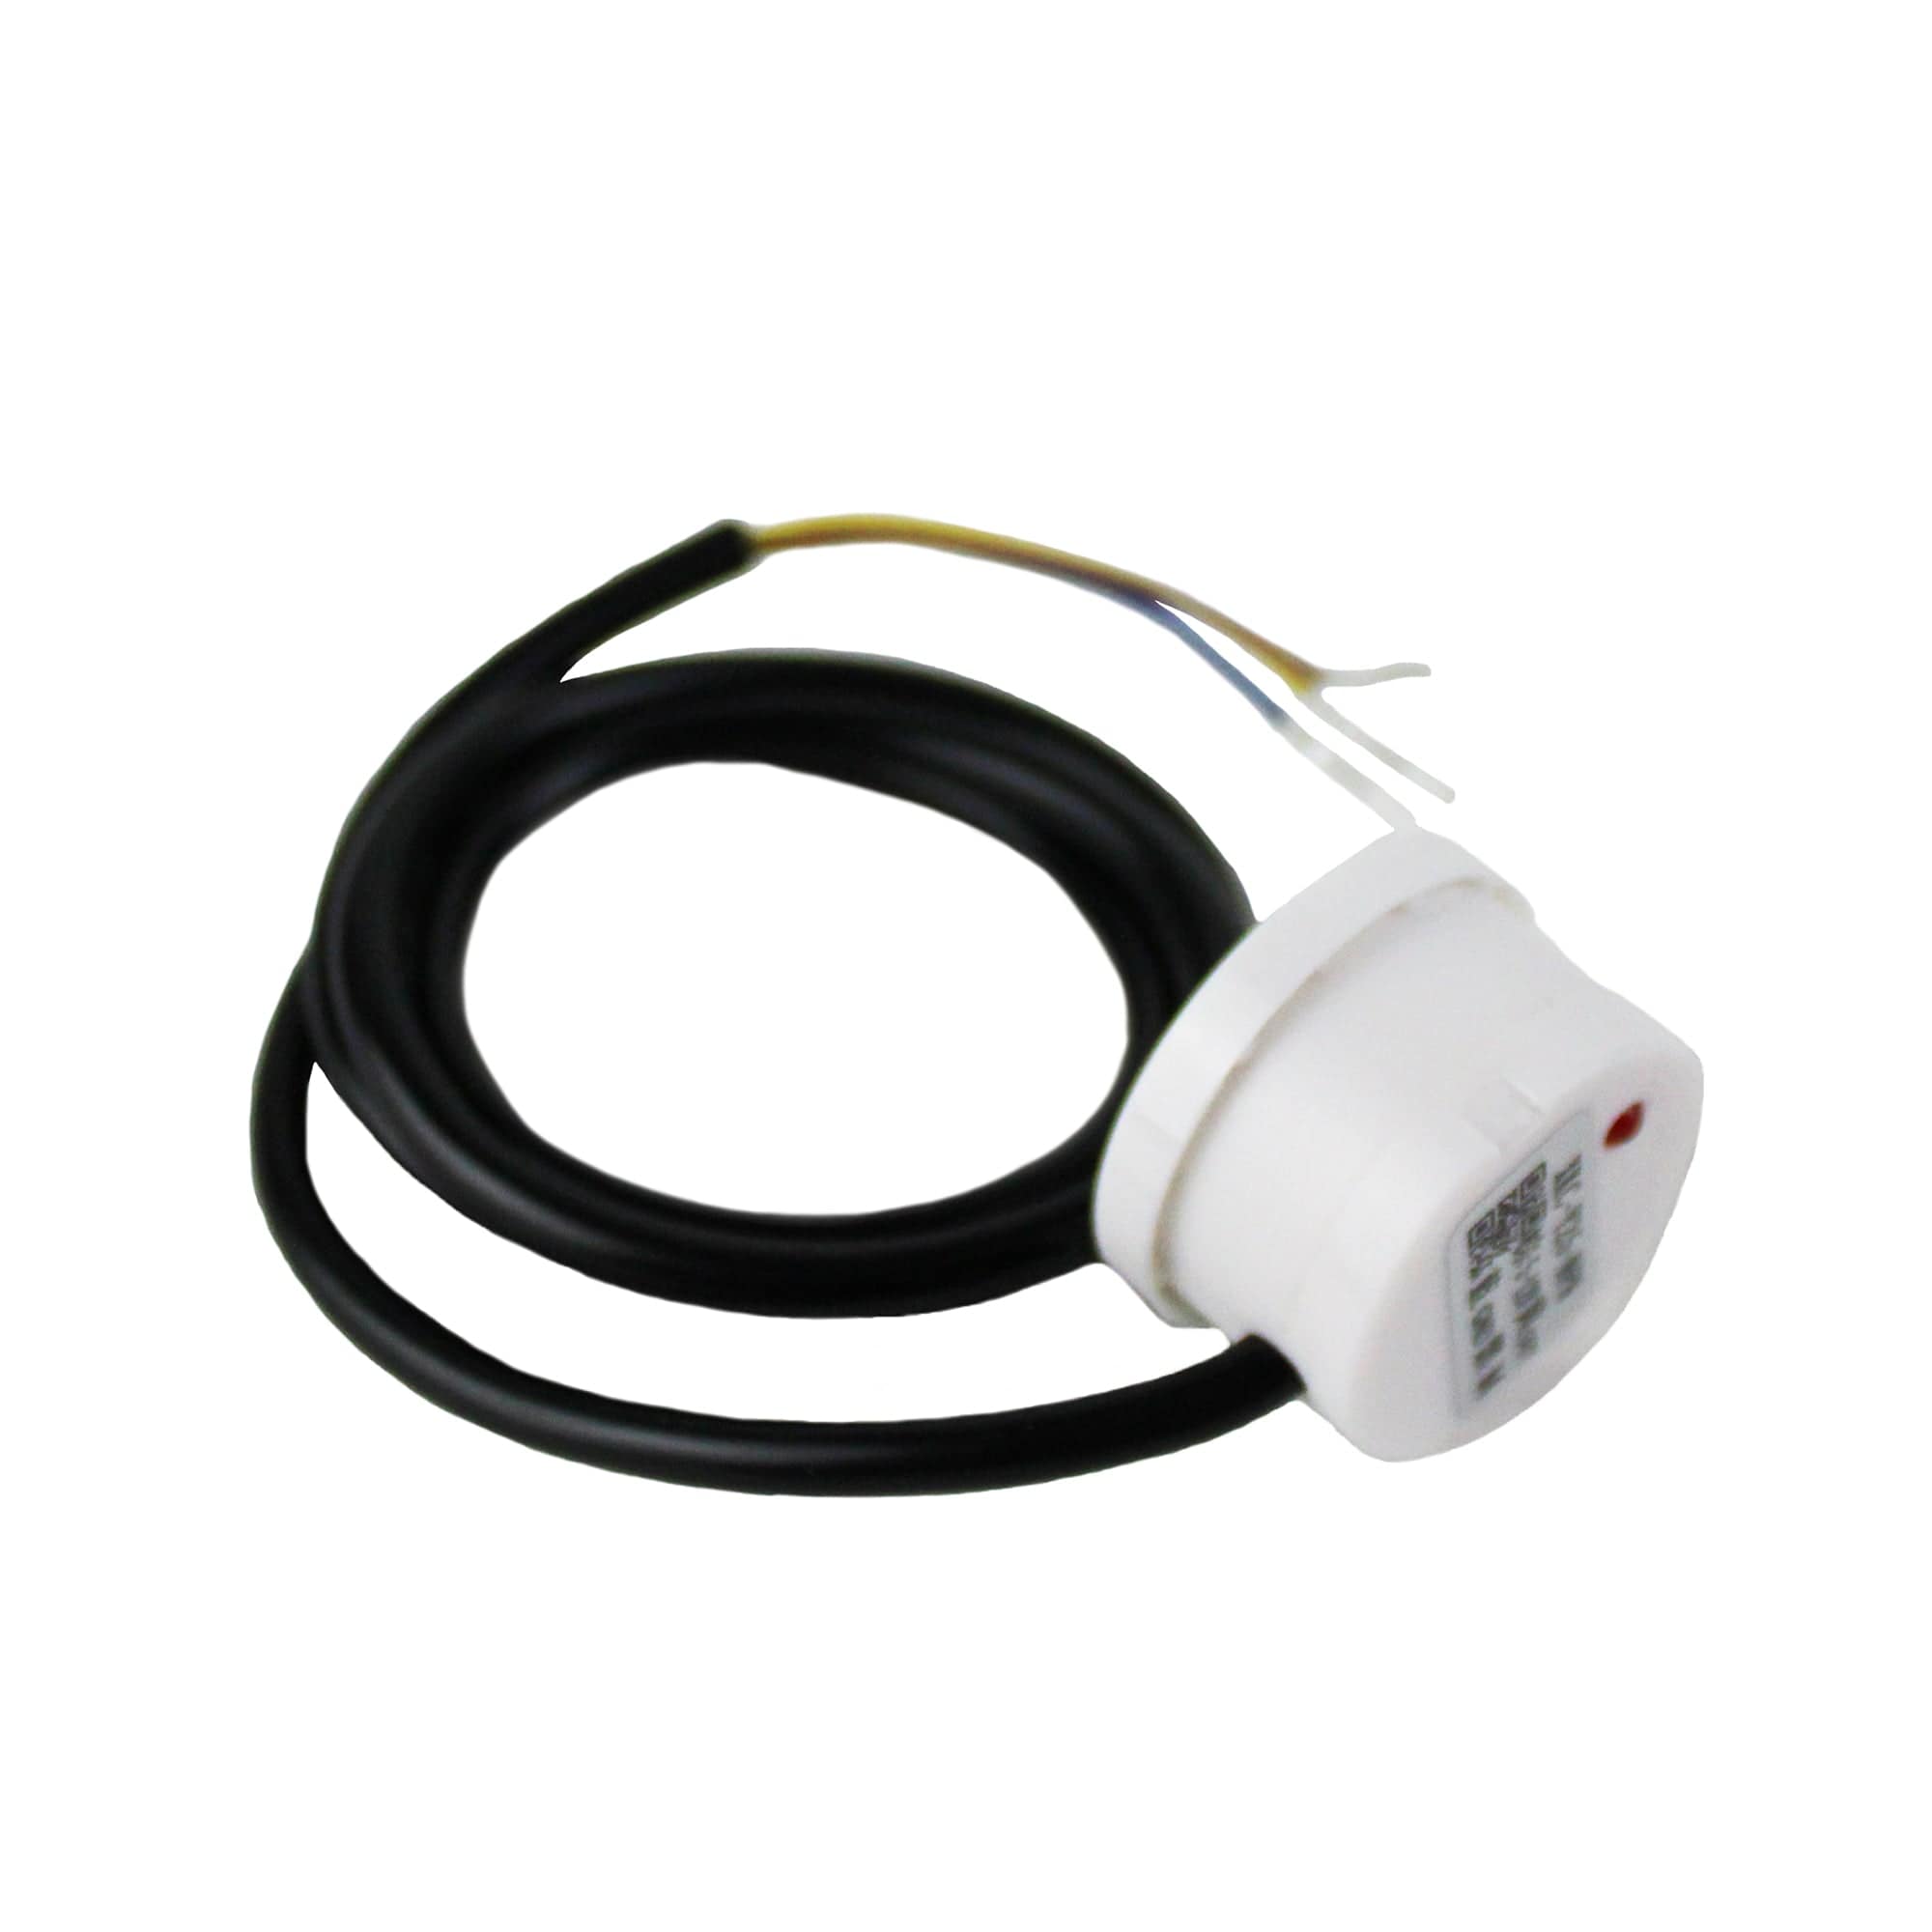 OGO 2207 Replacement Sensor, White